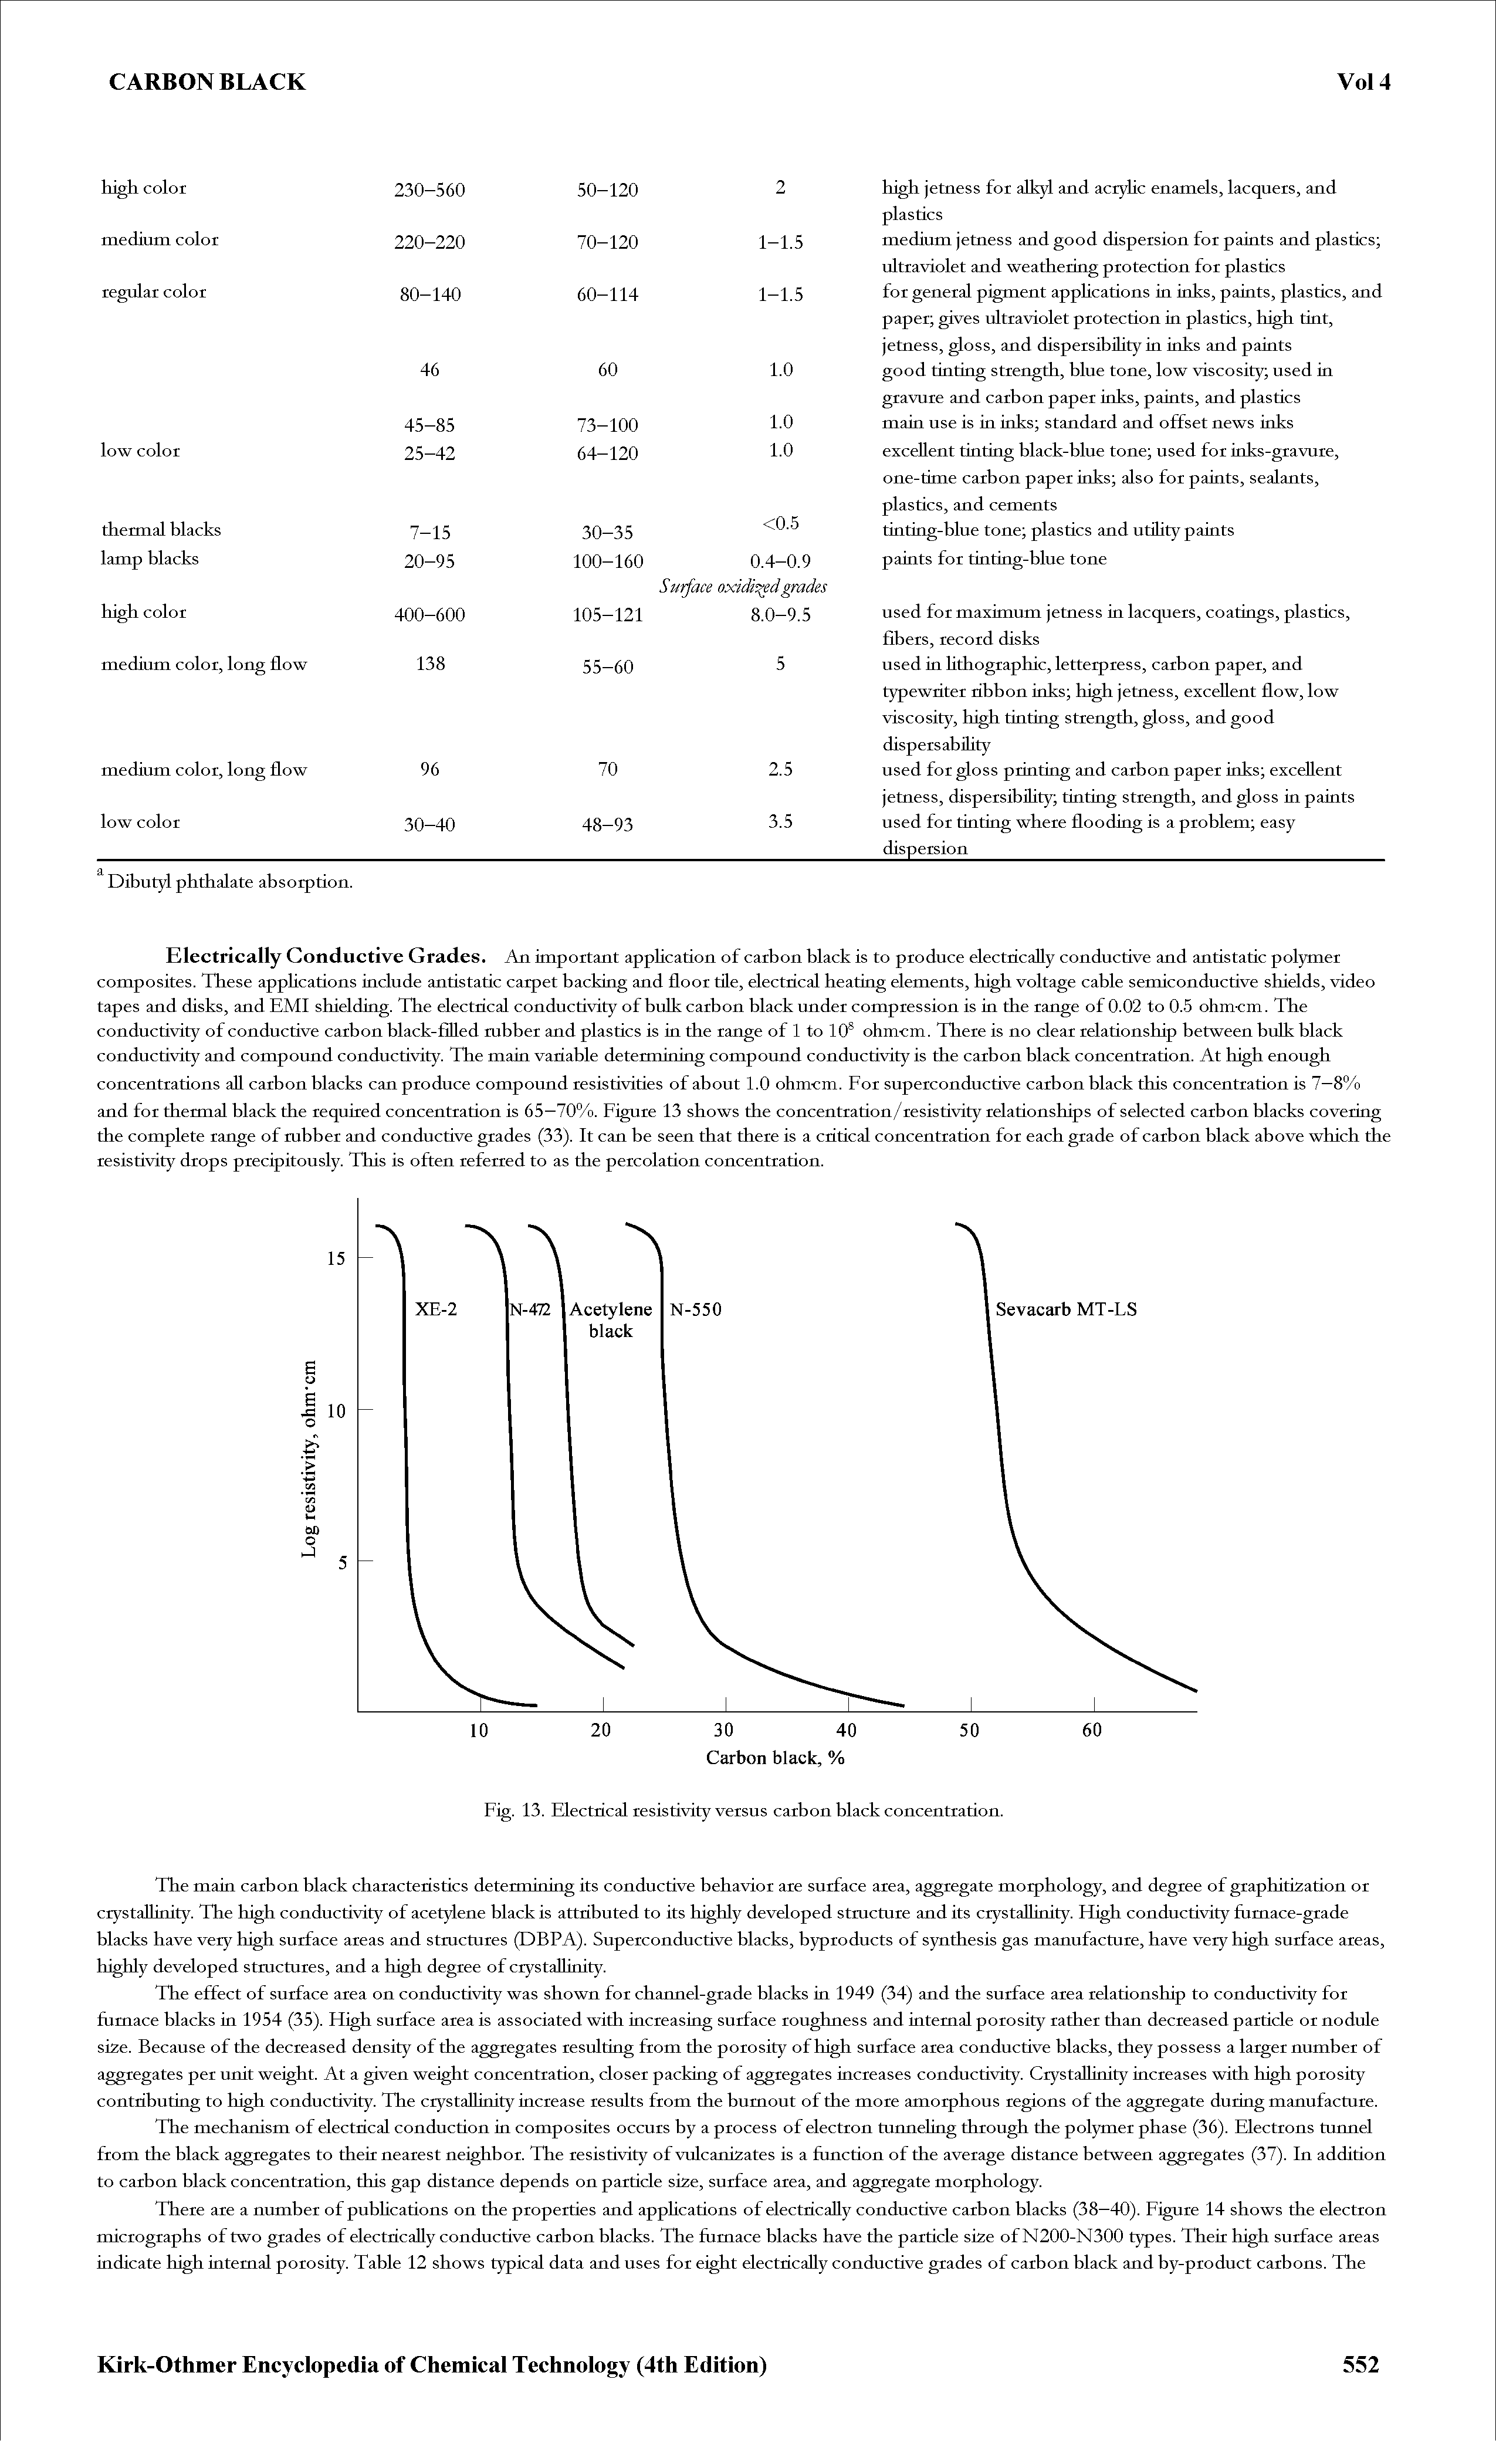 Fig. 13. Electrical resistivity versus carbon black concentration.